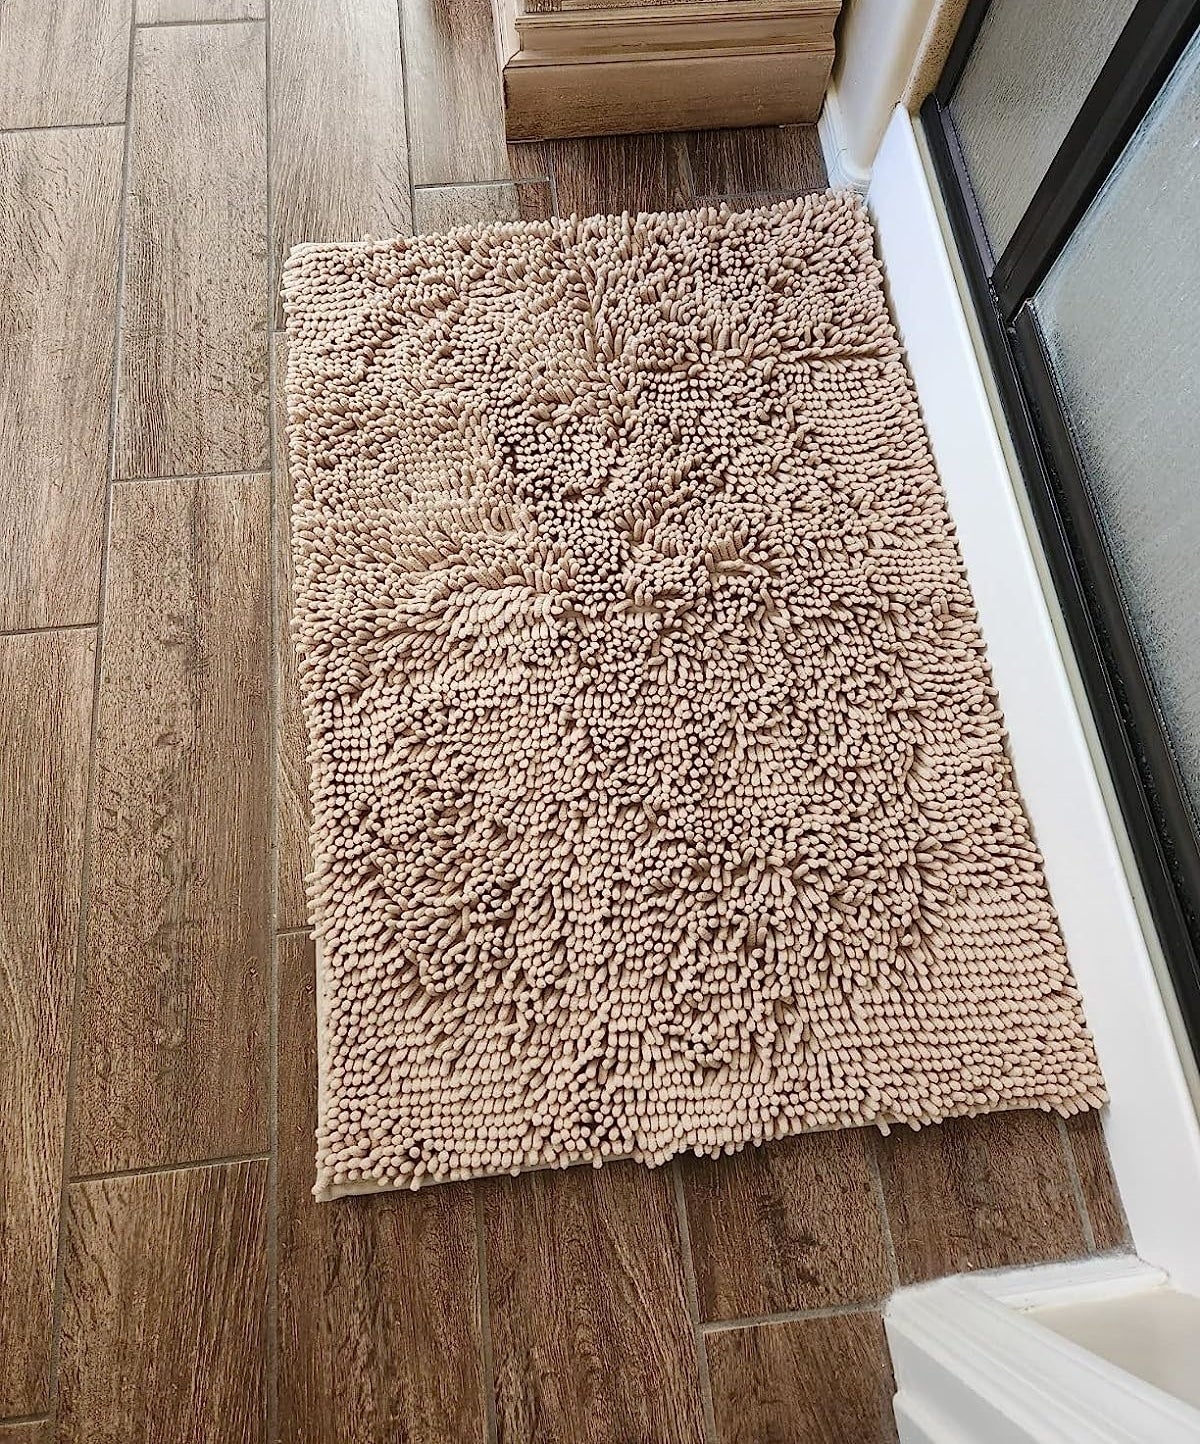 a reviewer photo of the tan bath mat on a bathroom floor